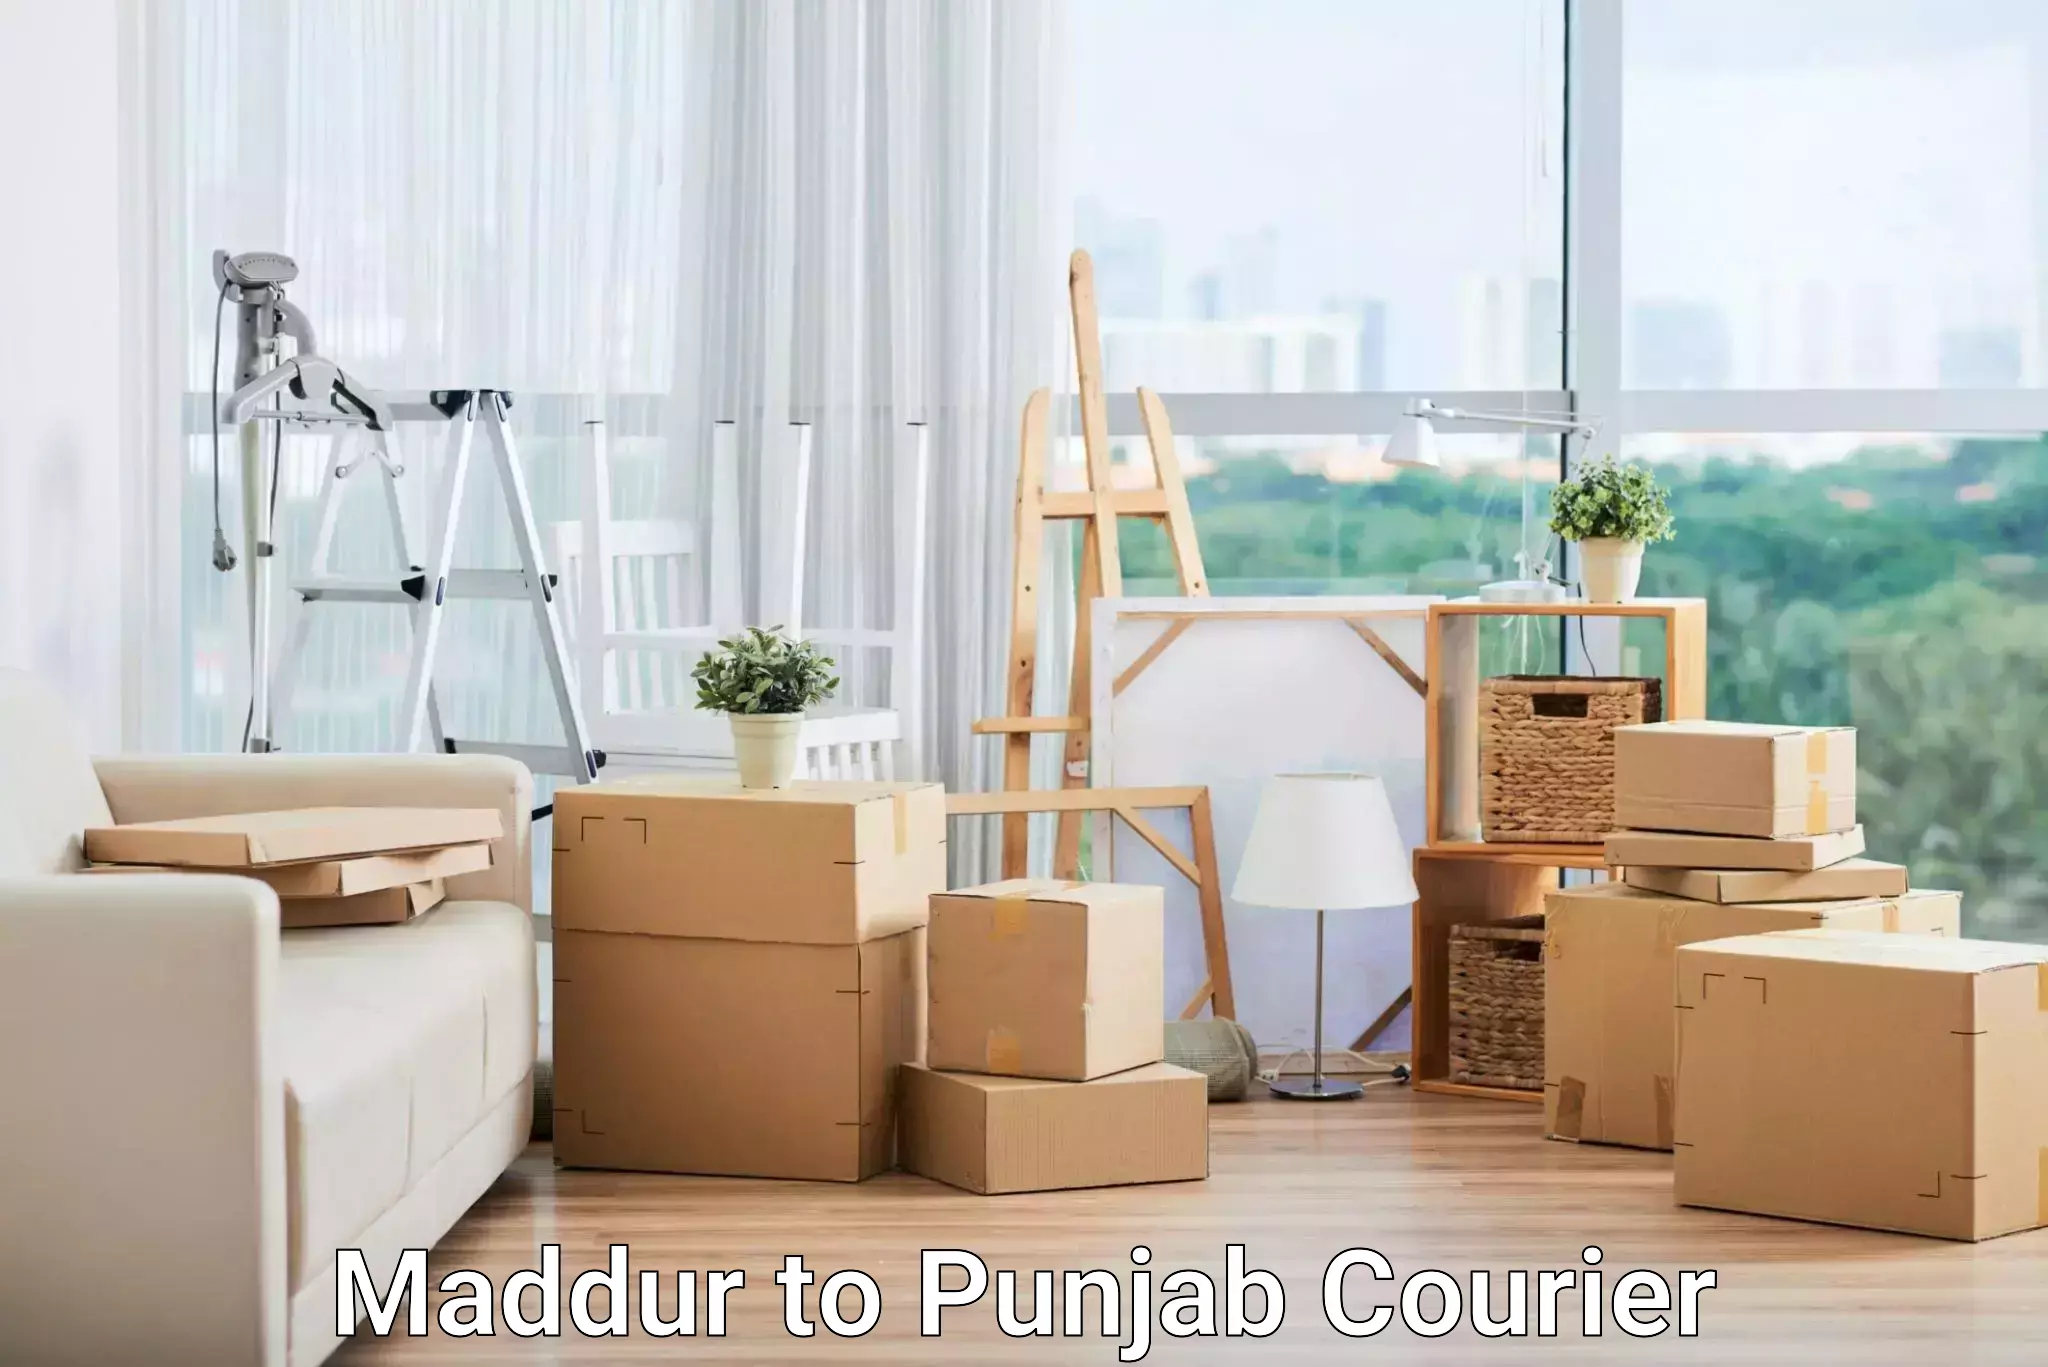 Package tracking Maddur to Punjab